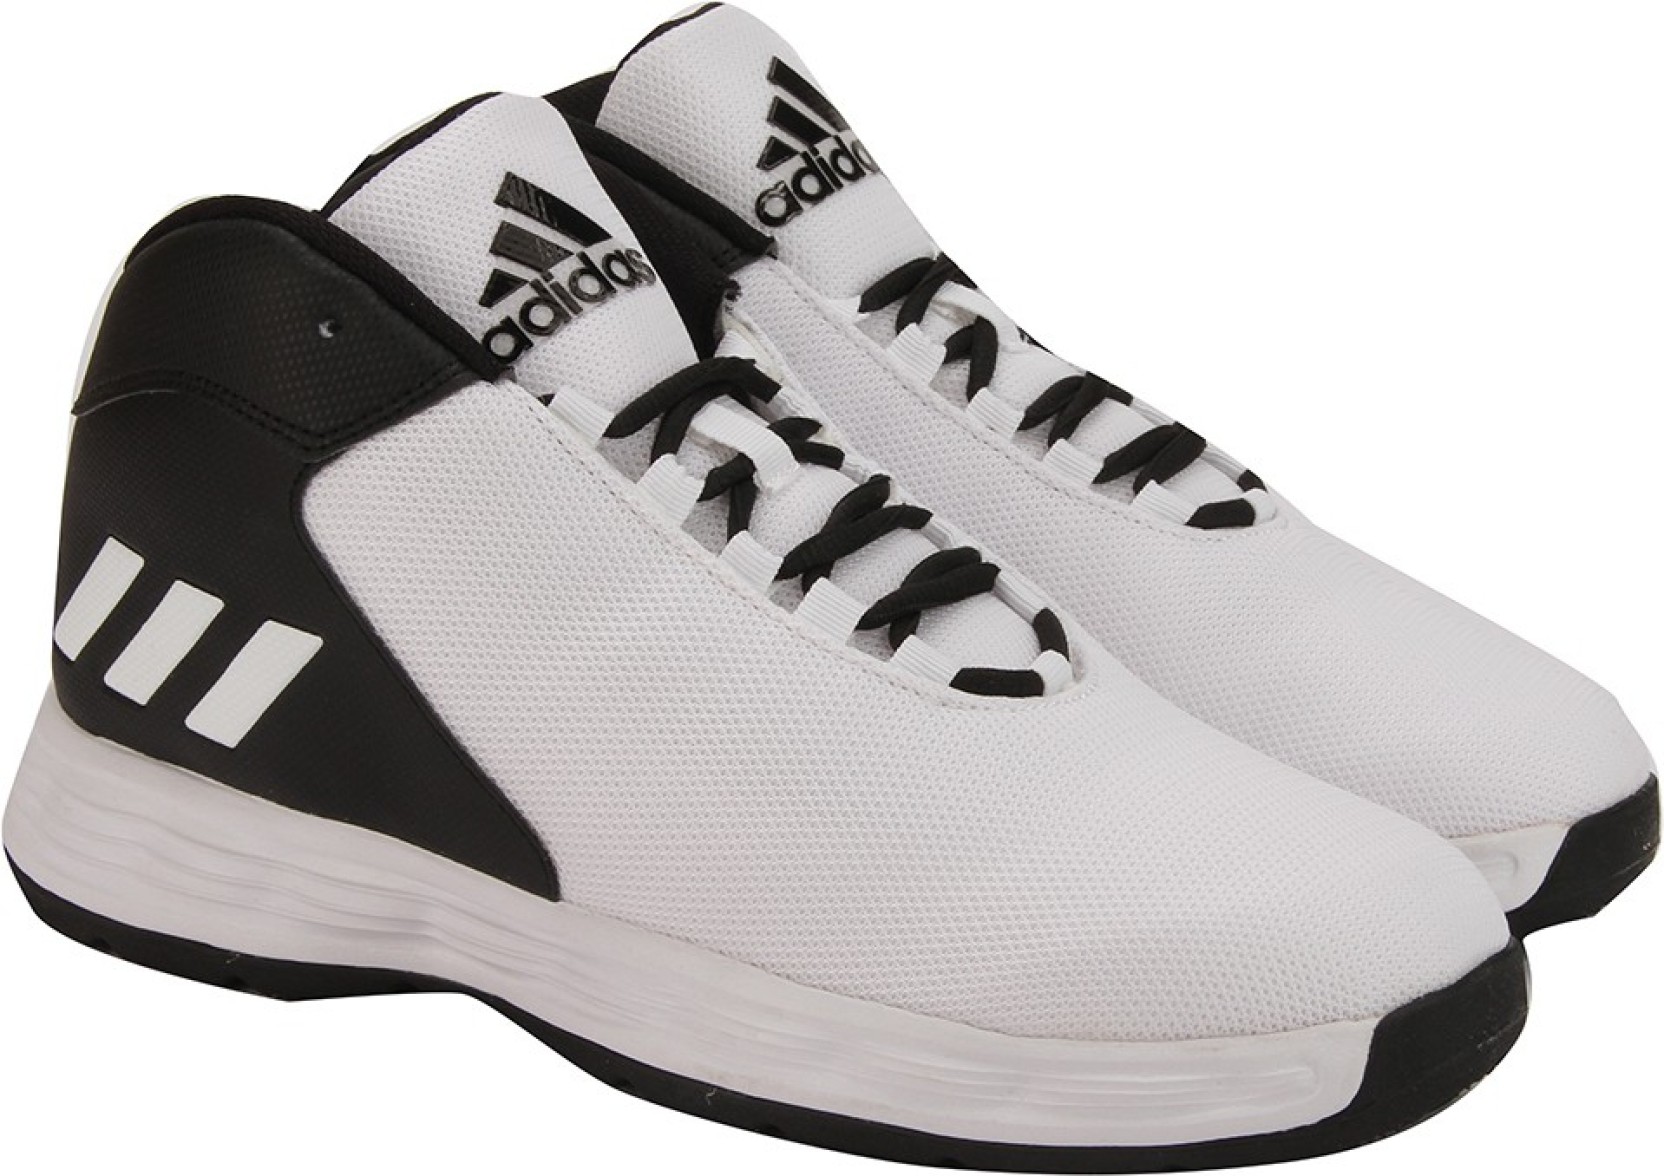 Adidas HOOPSTA Basketball Shoes - Buy BLACK/WHITE Color Adidas HOOPSTA Basketball Shoes Online ...